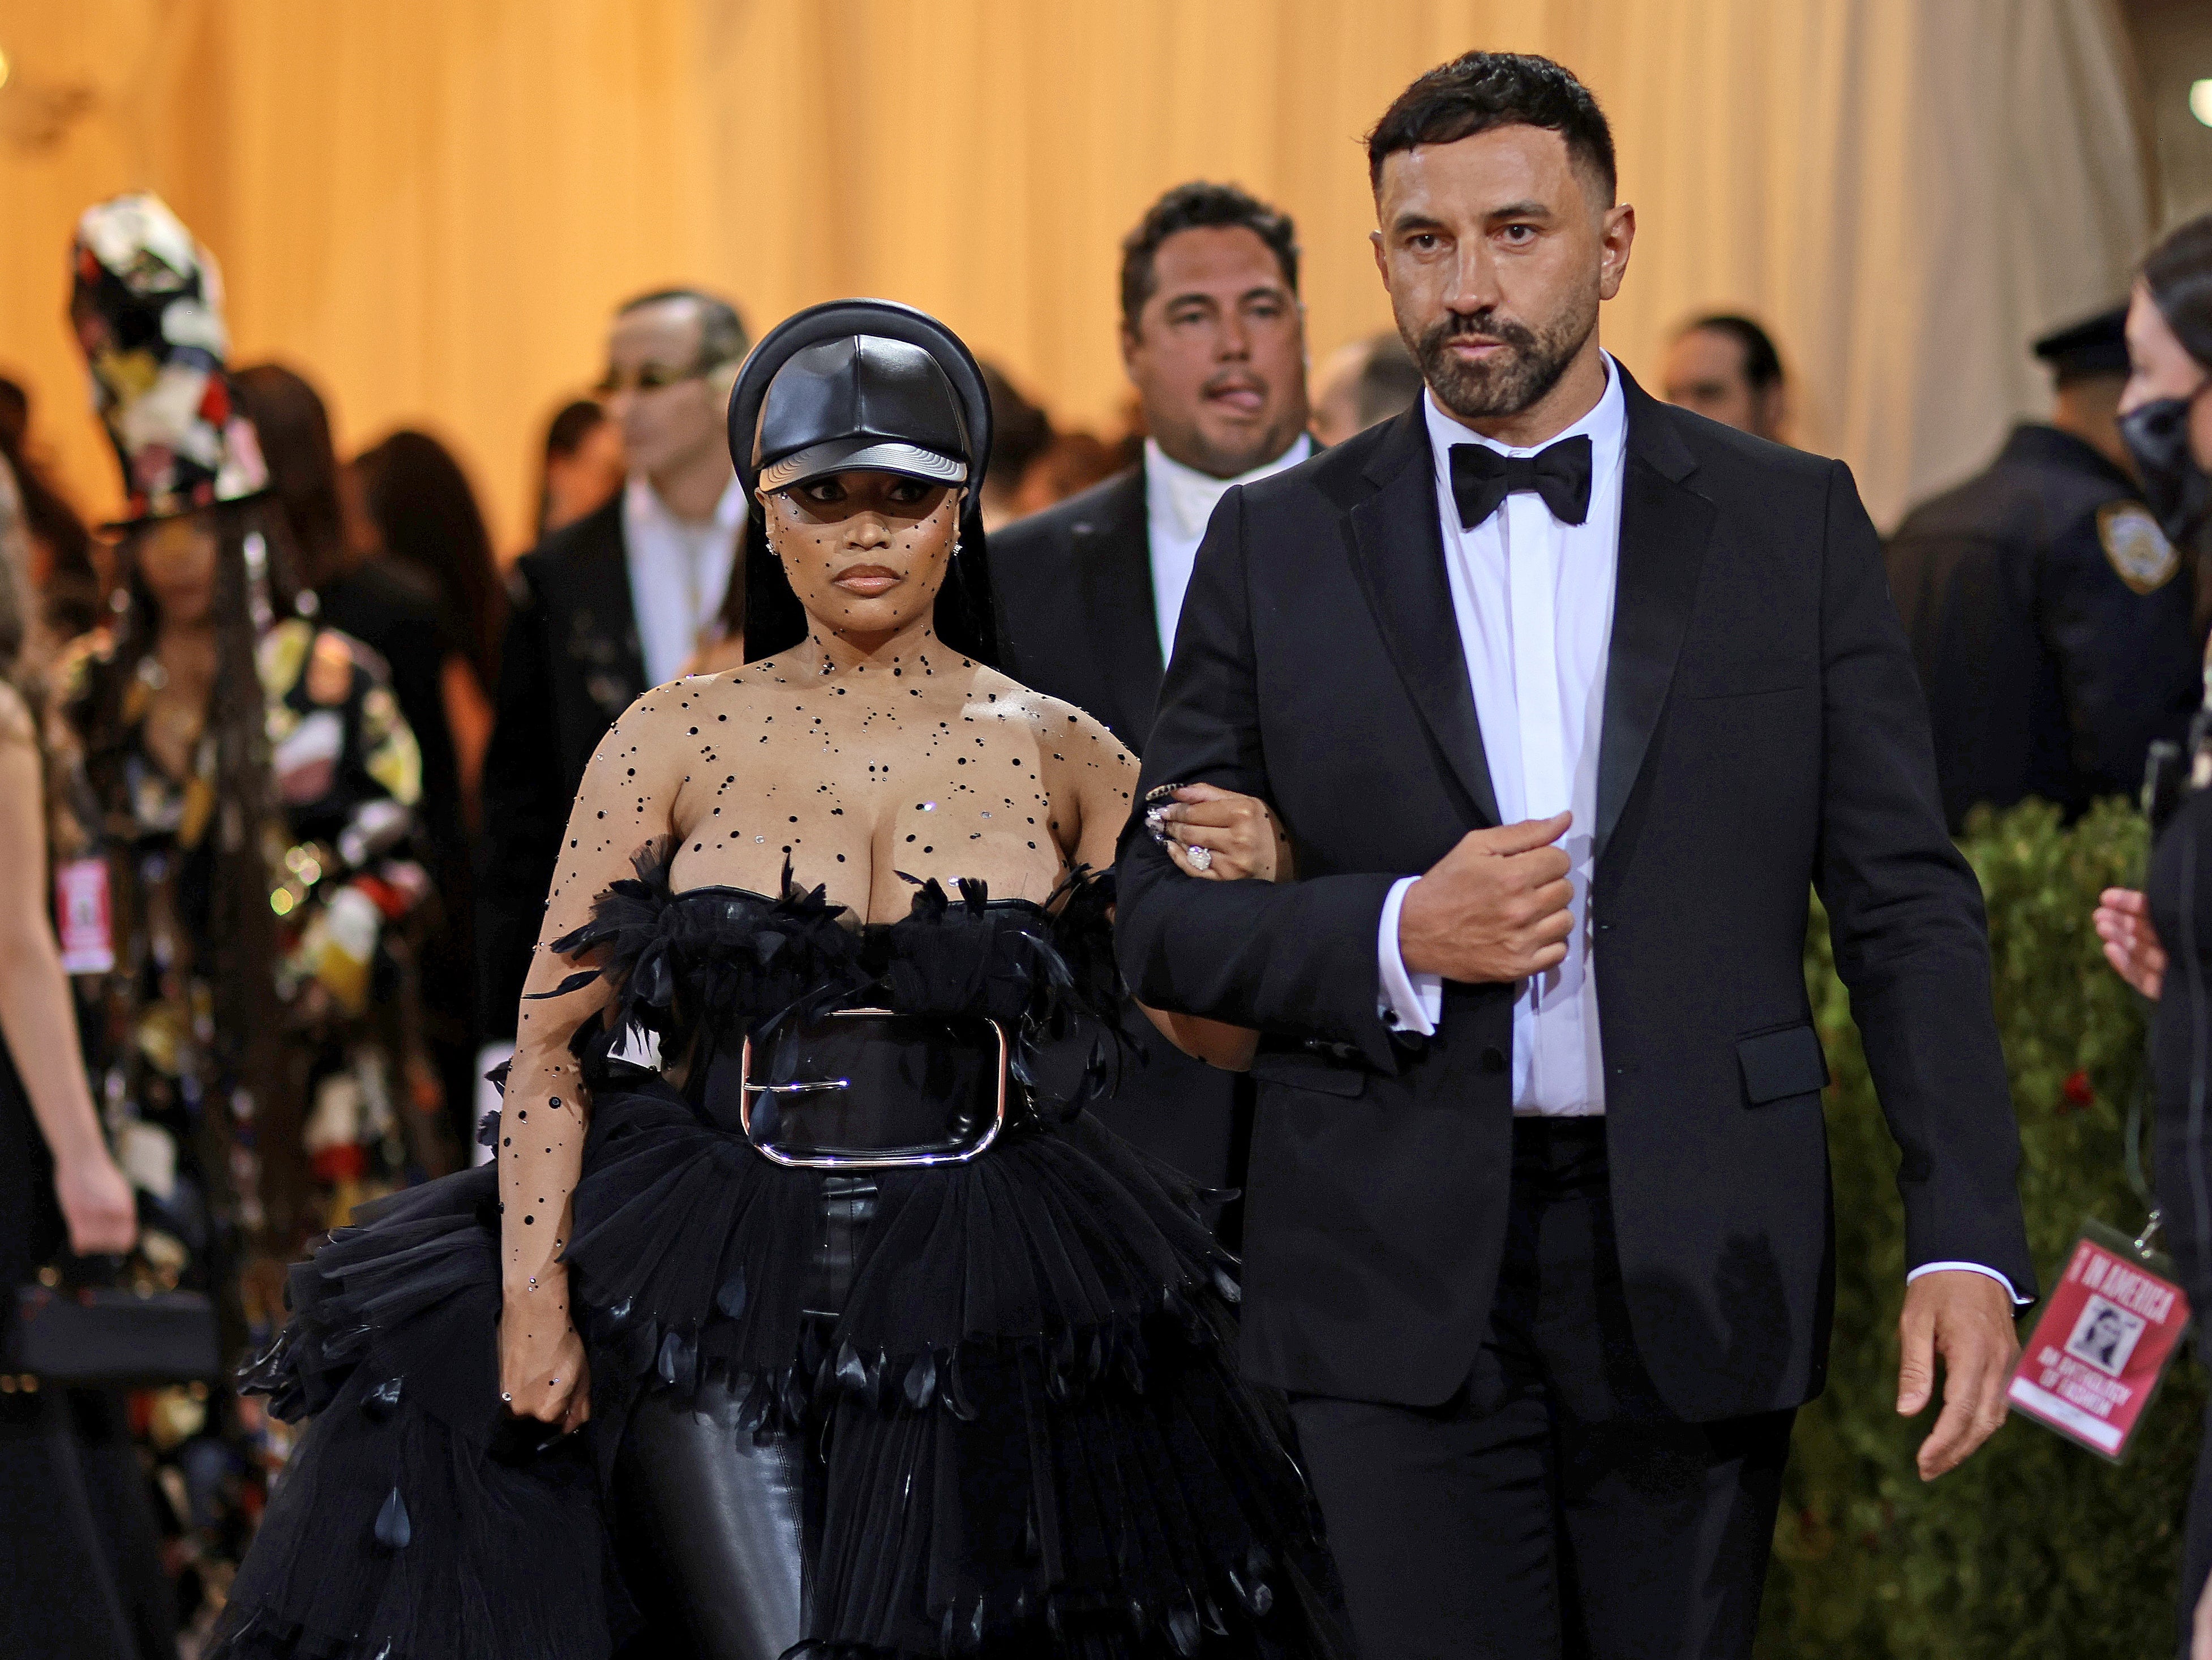 Nicki Minaj and Riccardo Tisci attend The 2022 Met Gala Celebrating "In America: An Anthology of Fashion" at The Metropolitan Museum of Art on May 02, 2022